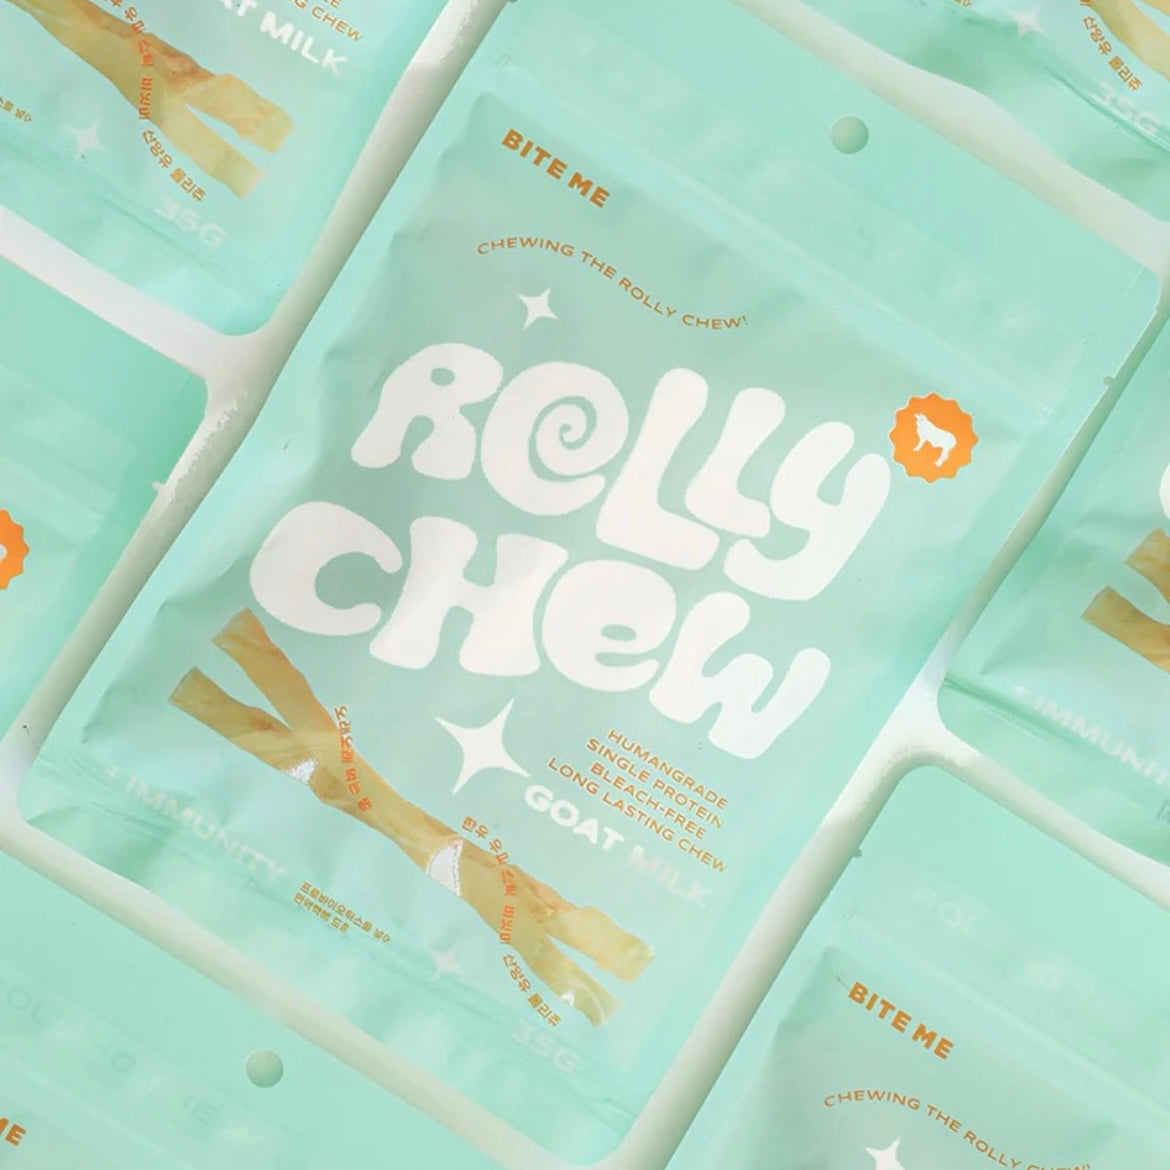 Rolly Chew (Goat's Milk)